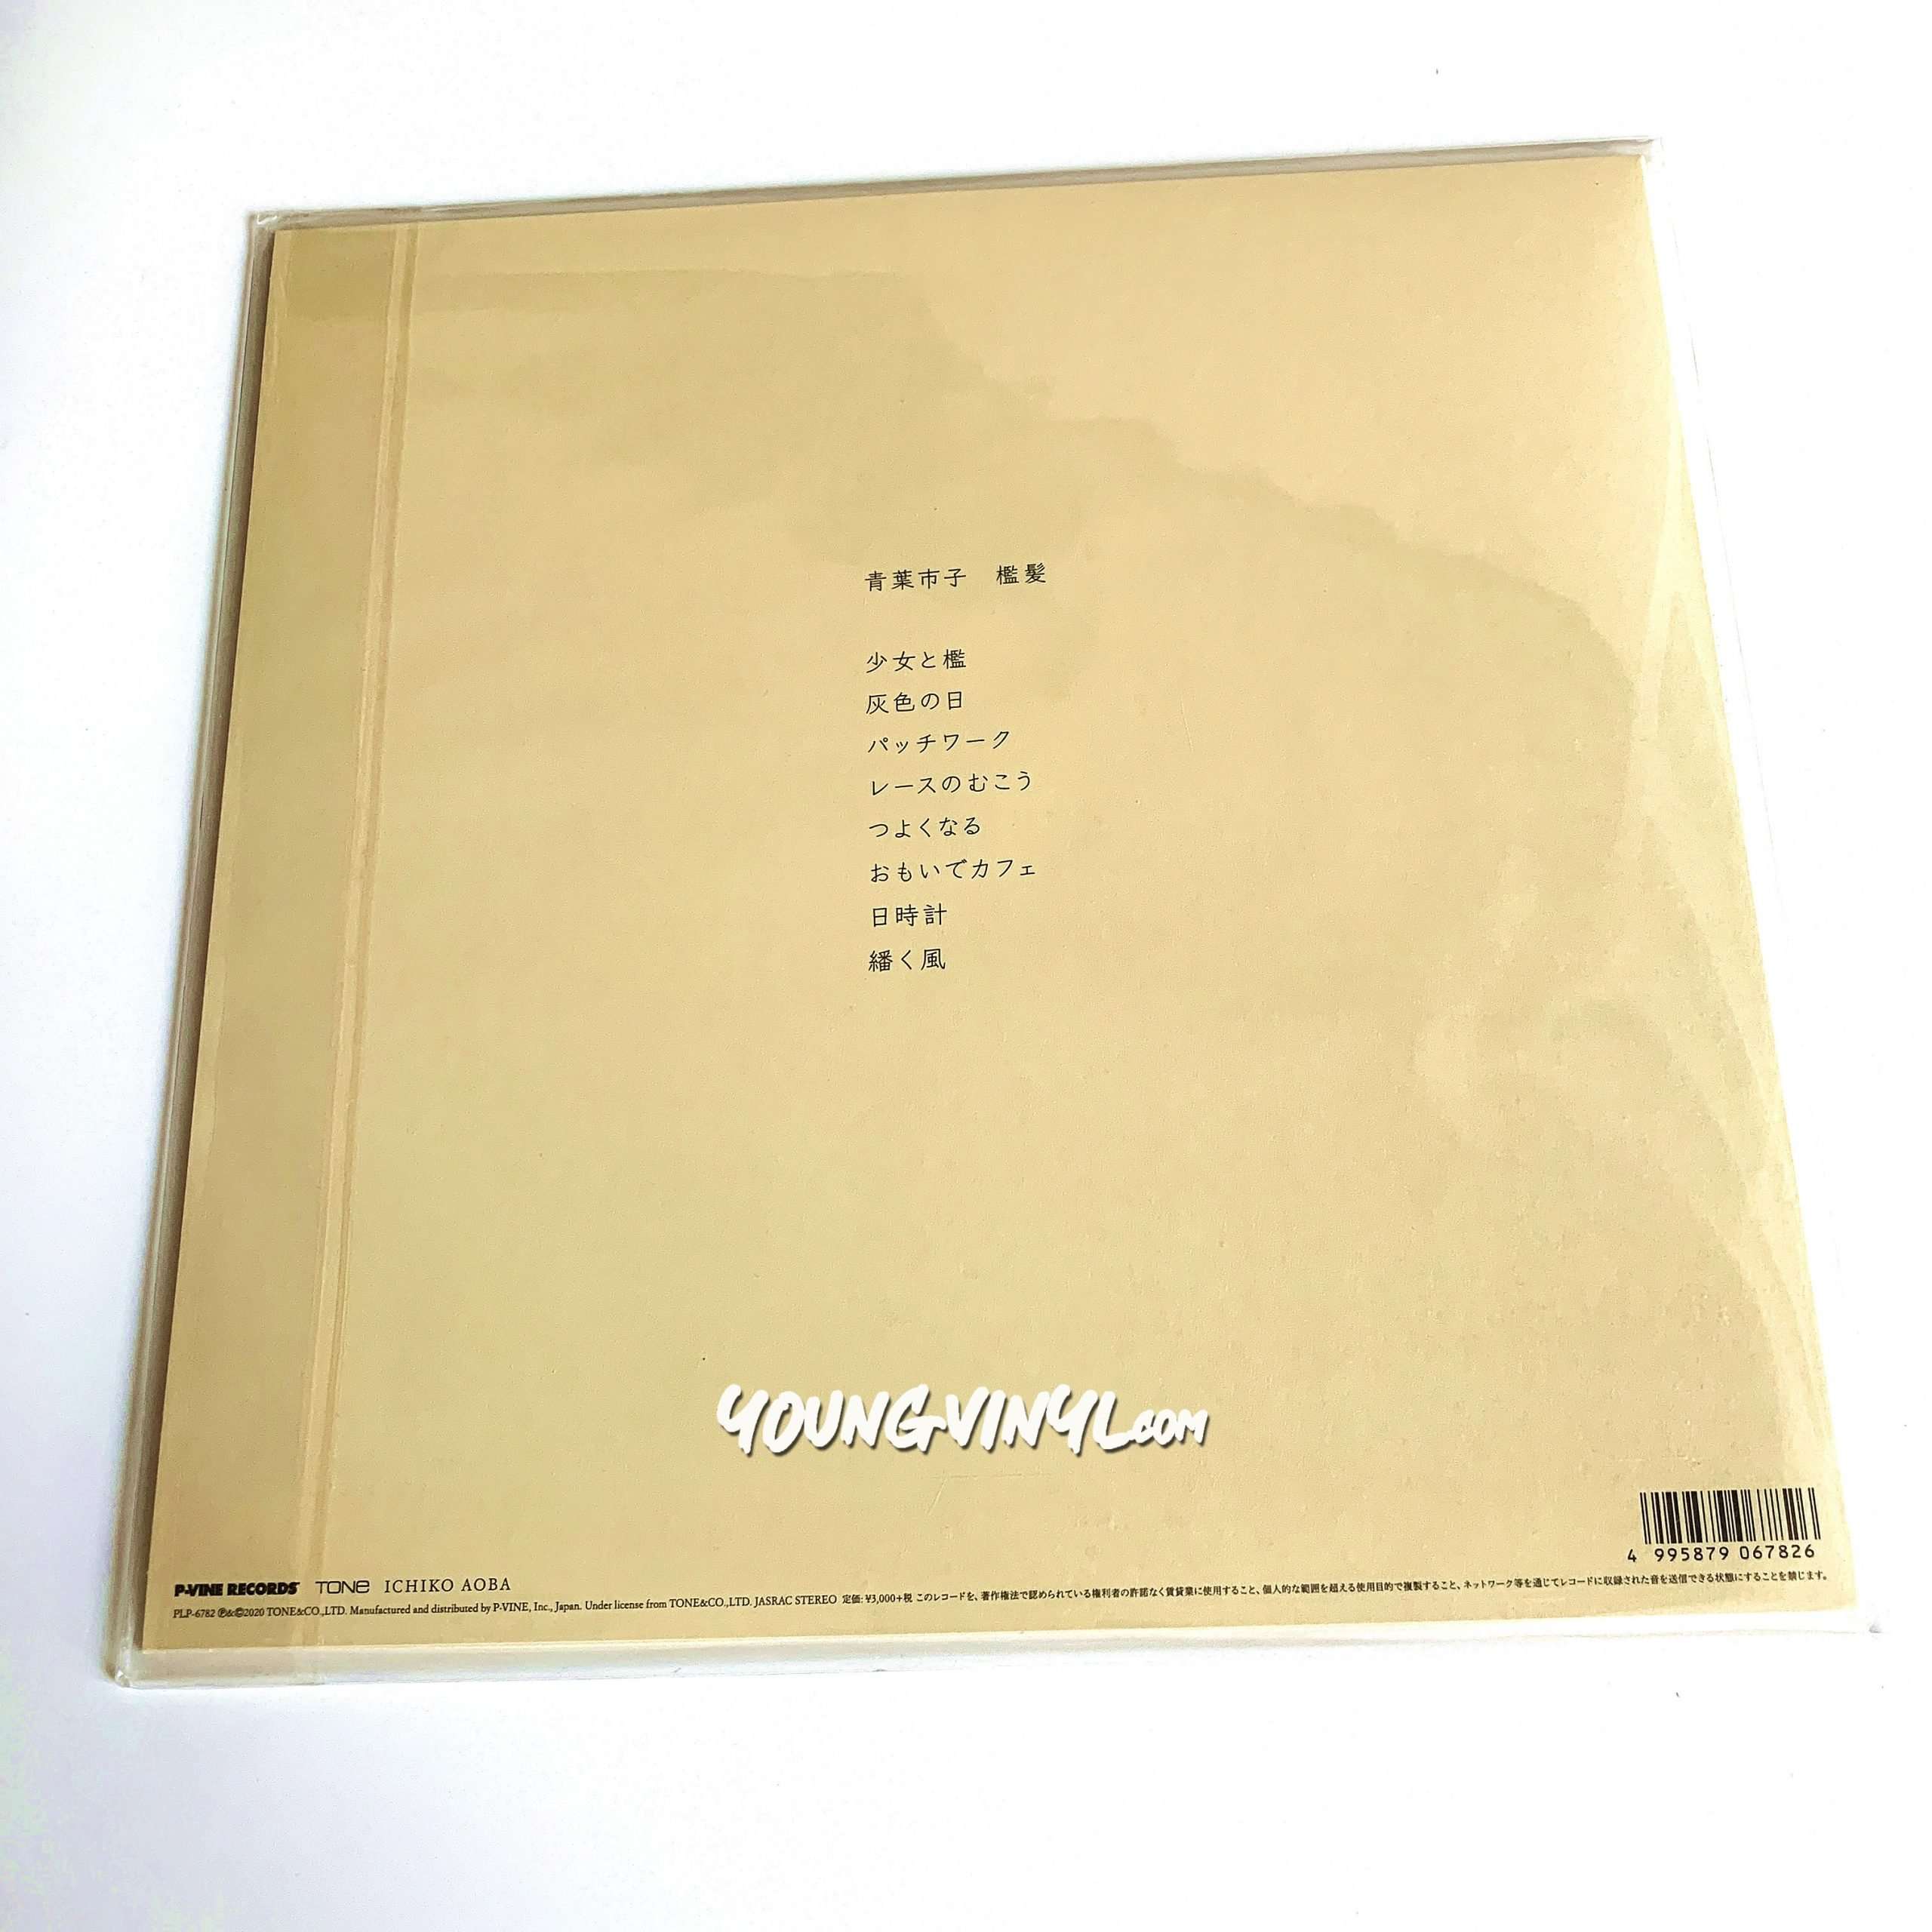 Ichiko Aoba Origami Vinyl 青葉市子 檻髪 - Young Vinyl